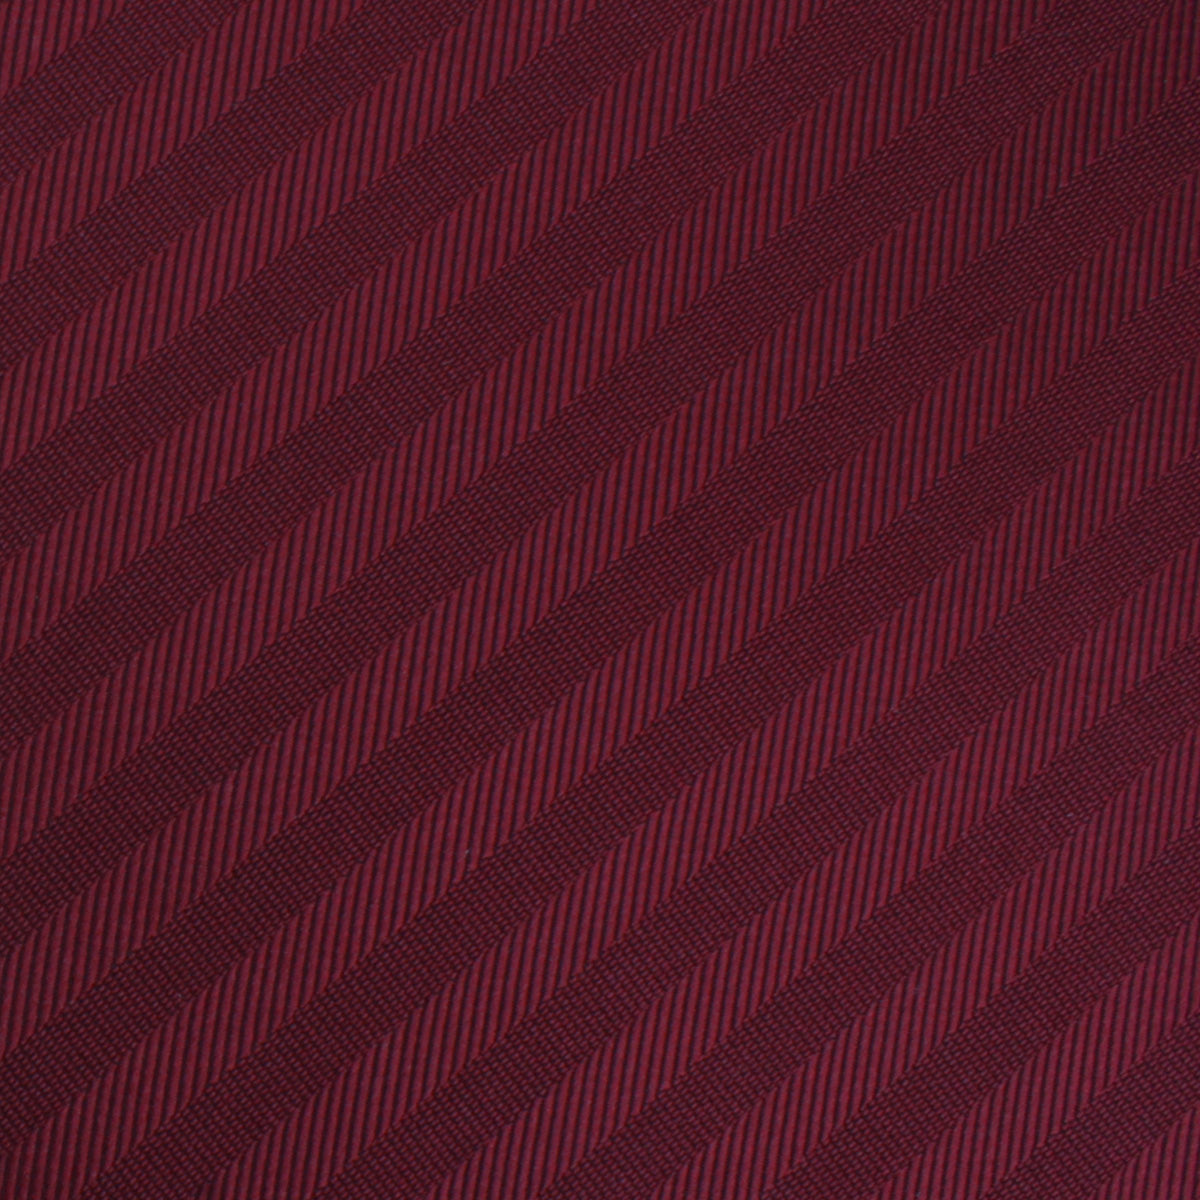 Merlot Wine Striped Fabric Swatch